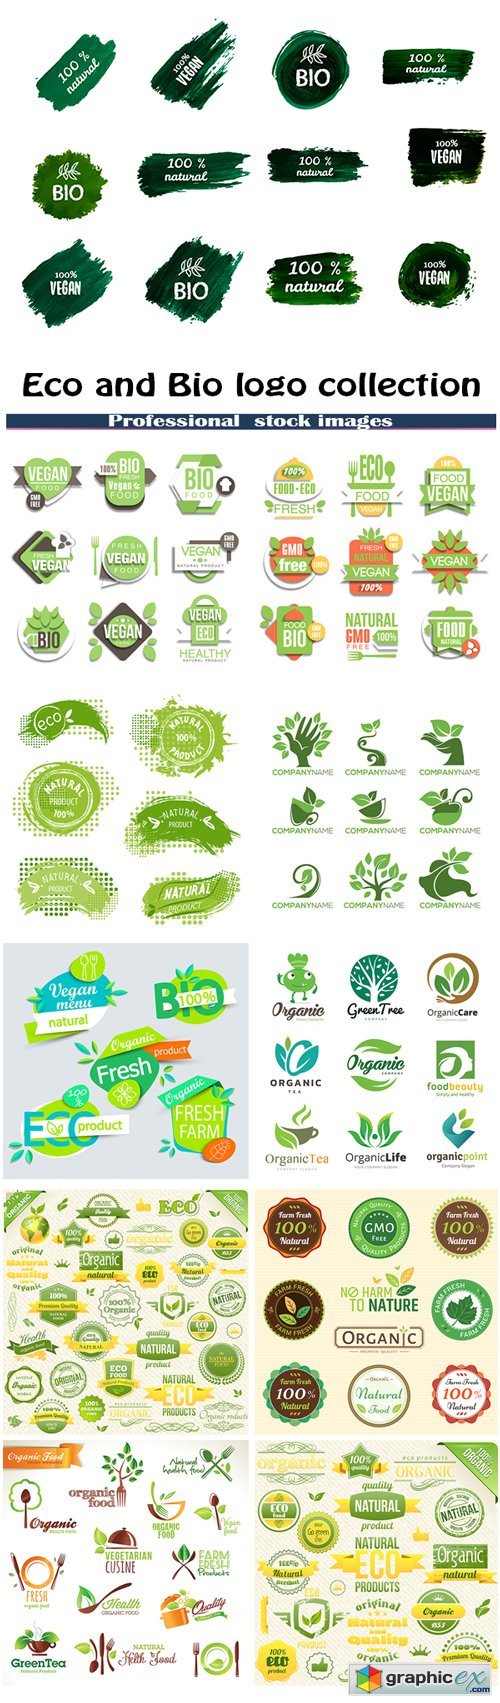 Eco and Bio logo collection